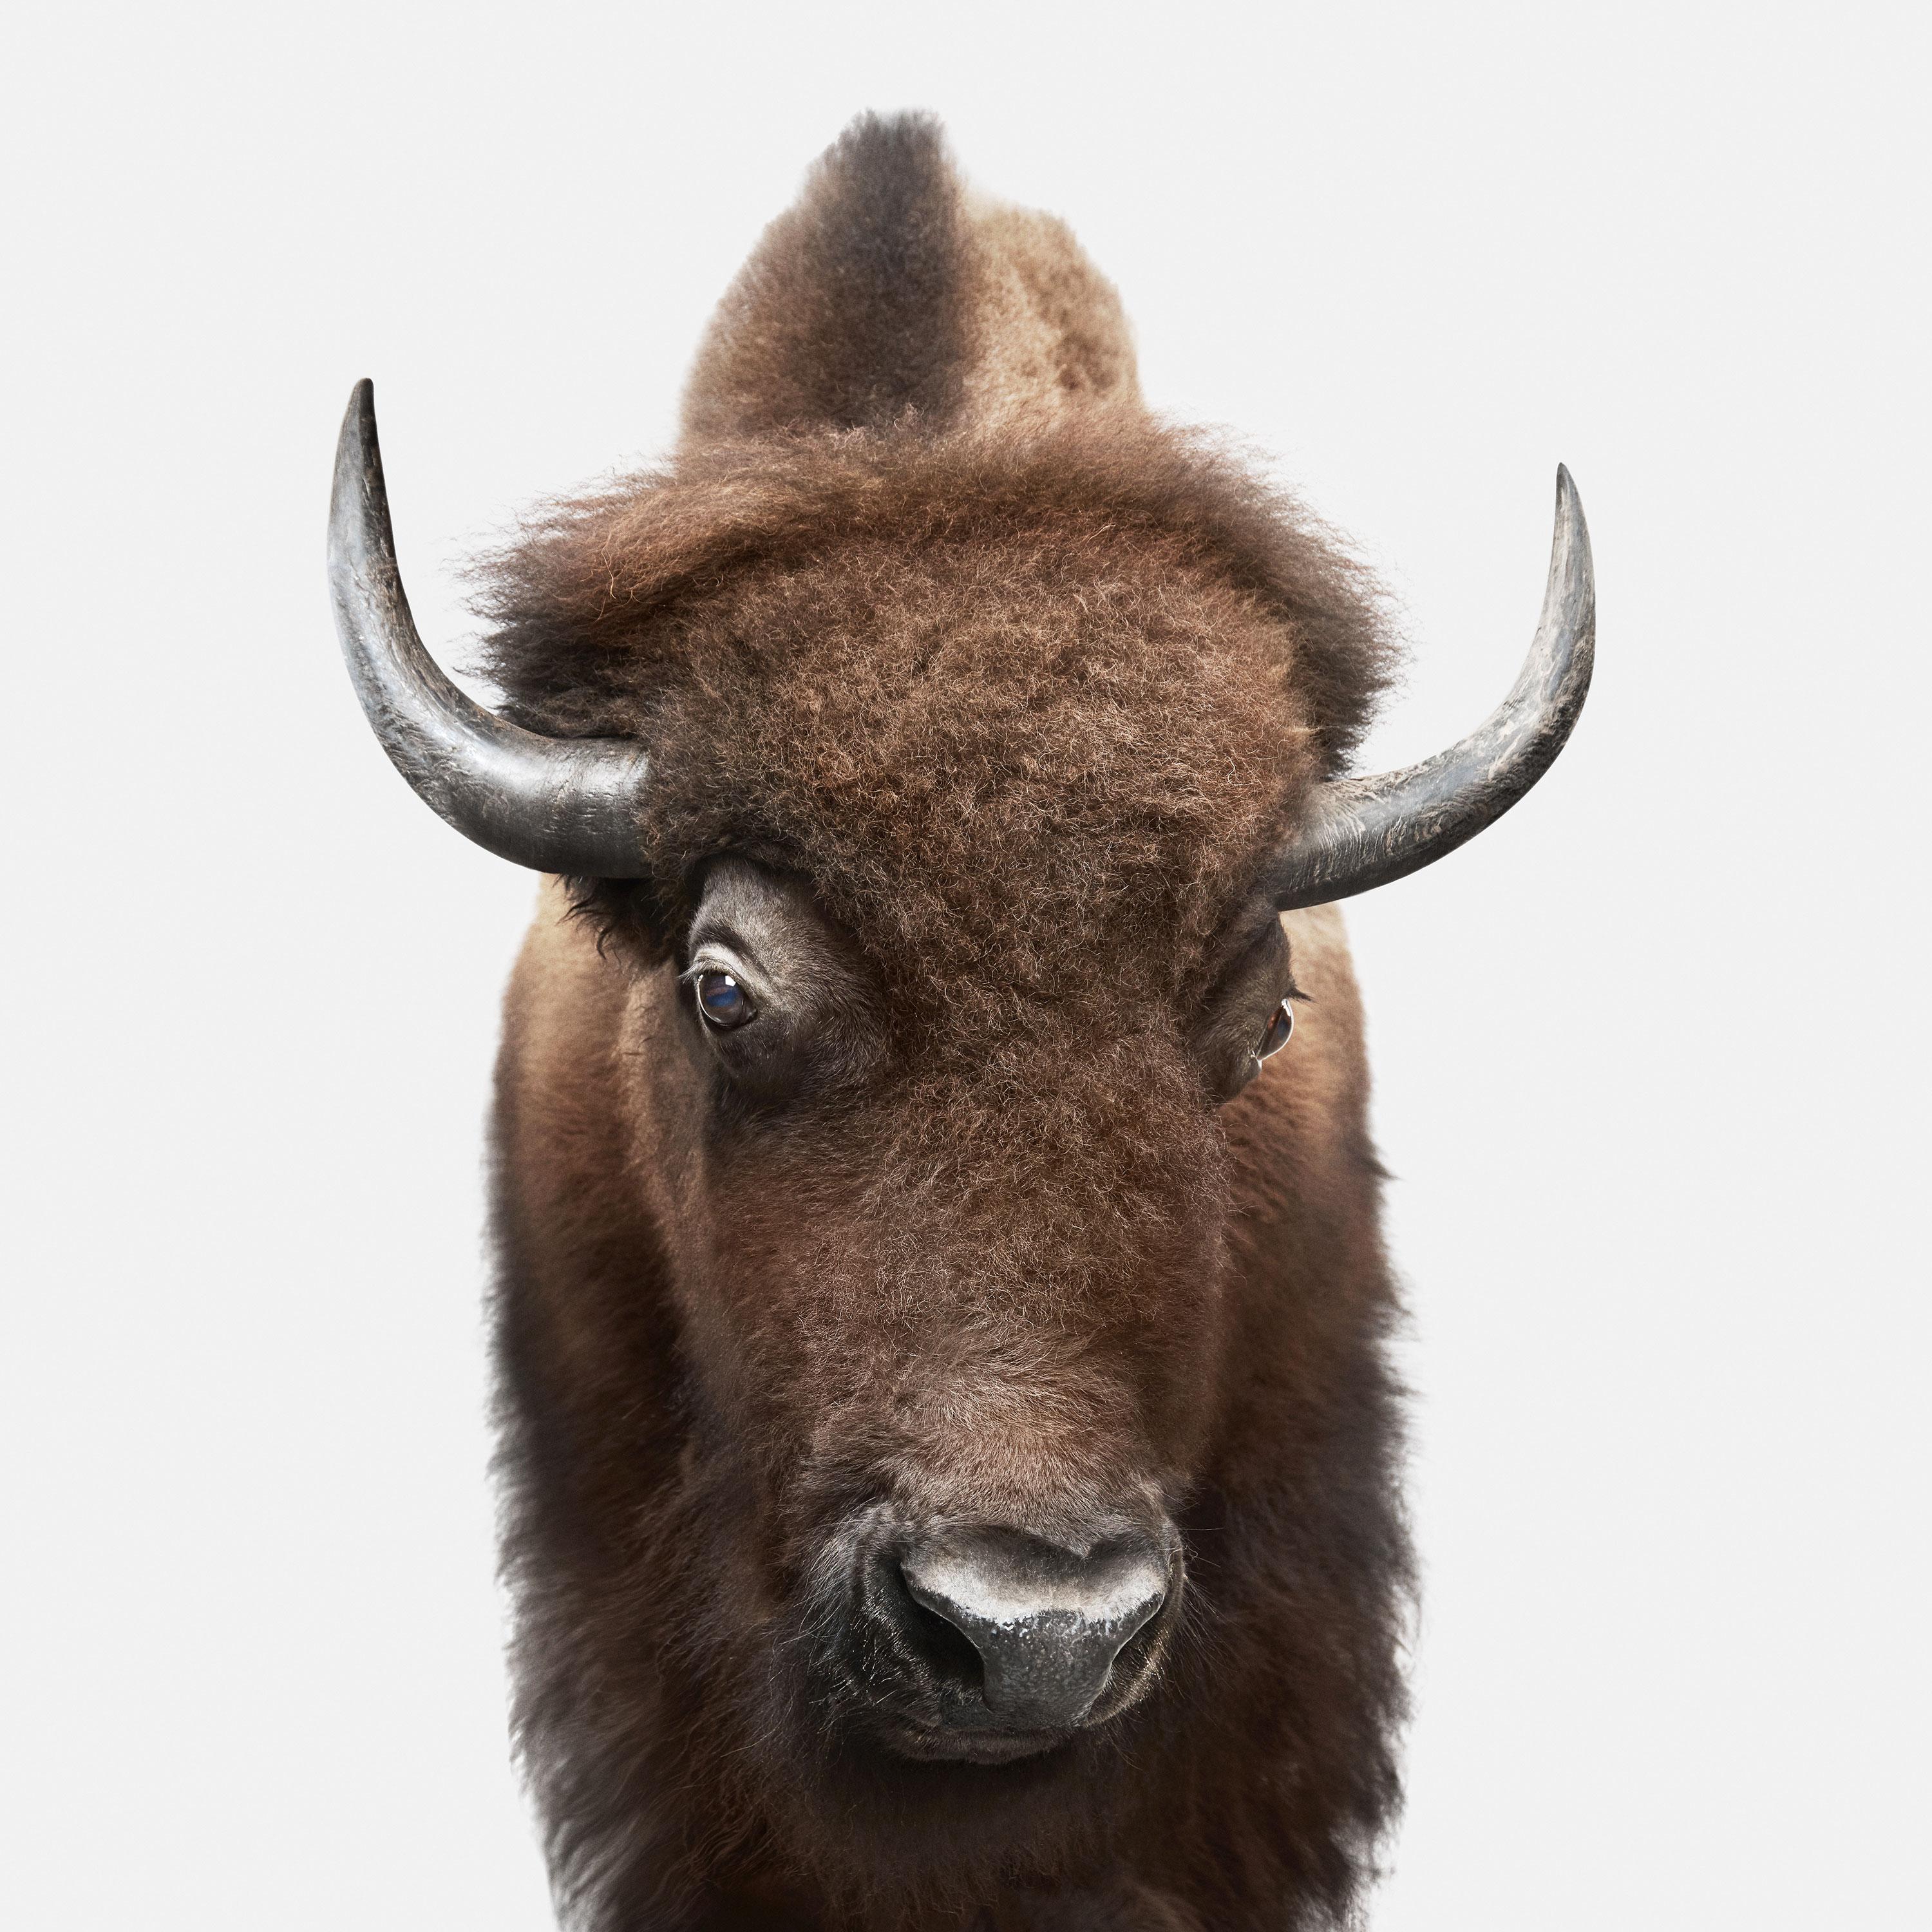 Randal Ford Color Photograph - American Buffalo (32" x 32")